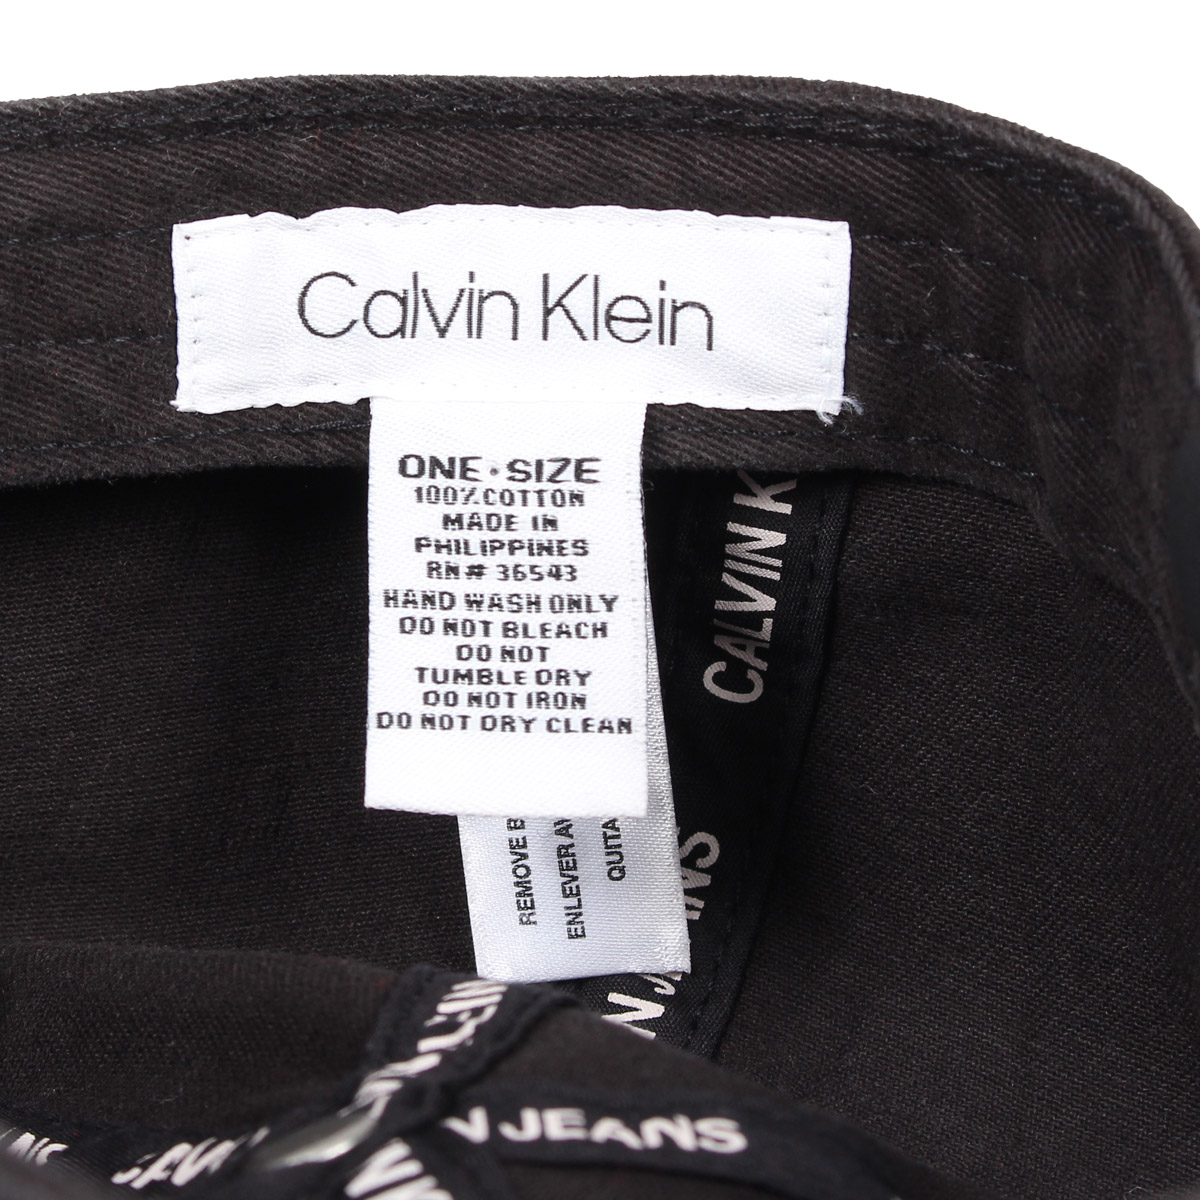 calvin klein jeans rn 36543